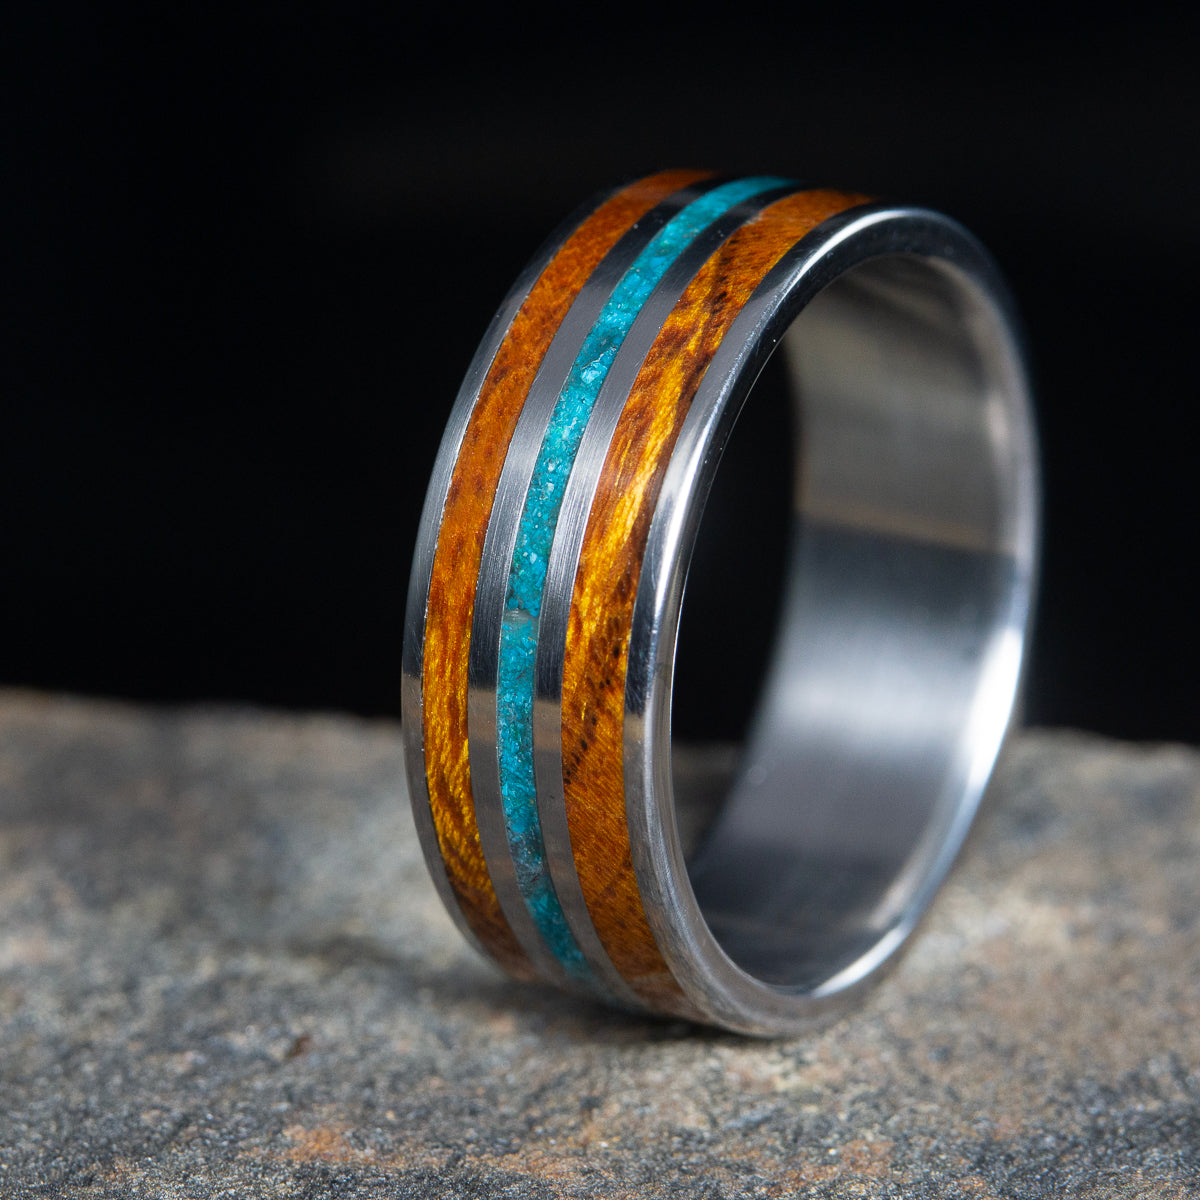 Turquoise wedding ring with ironwood inlays